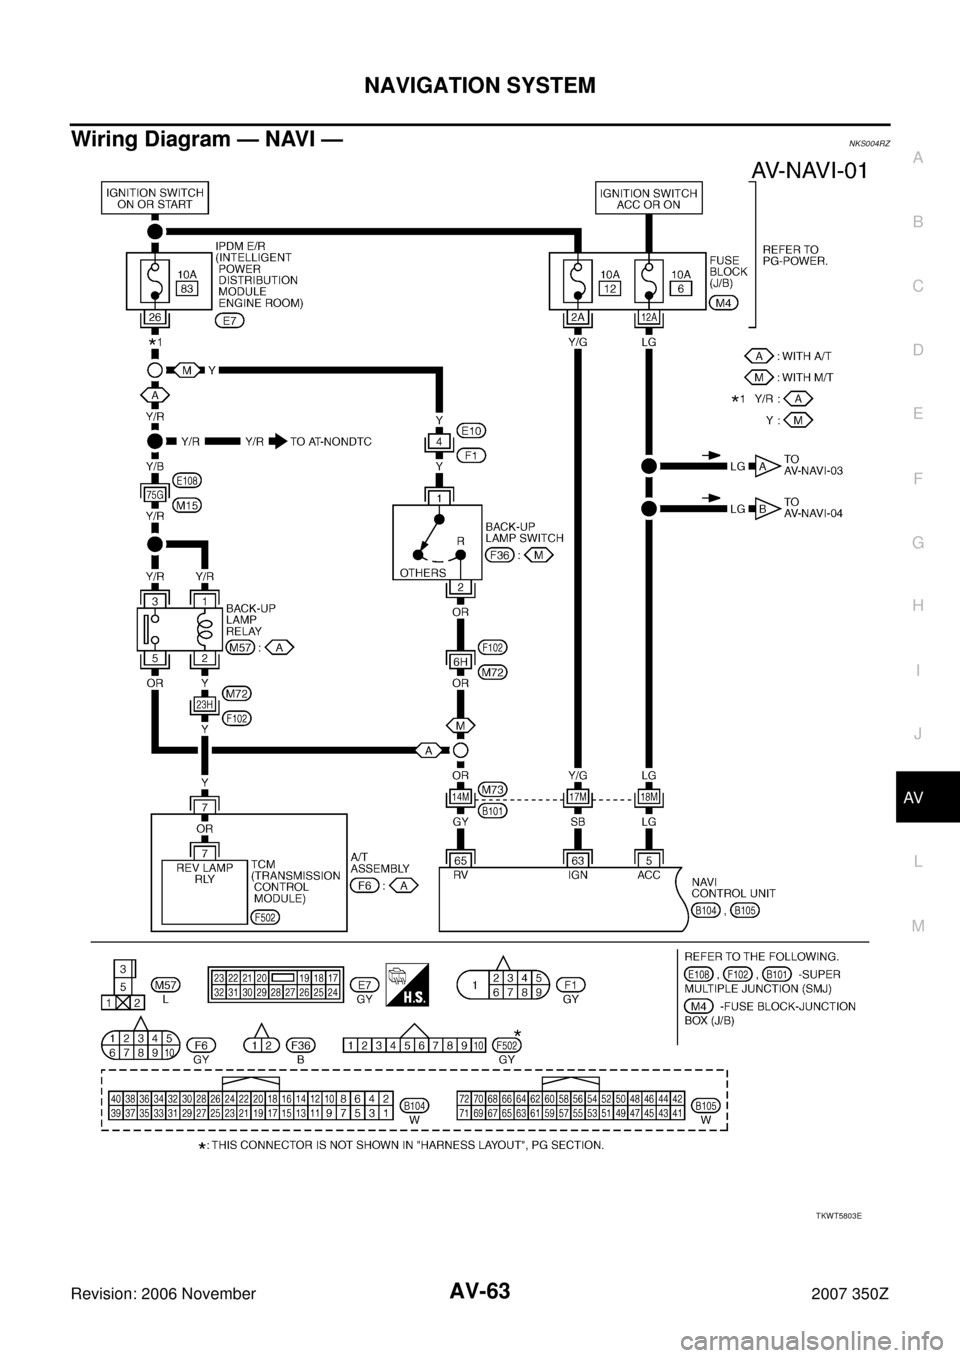 NISSAN 350Z 2007 Z33 Audio Visual, Navigation And Telephone System NAVIGATION SYSTEM
AV-63
C
D
E
F
G
H
I
J
L
MA
B
AV
Revision: 2006 November2007 350Z
Wiring Diagram — NAVI —NKS004RZ
TKWT5803E 